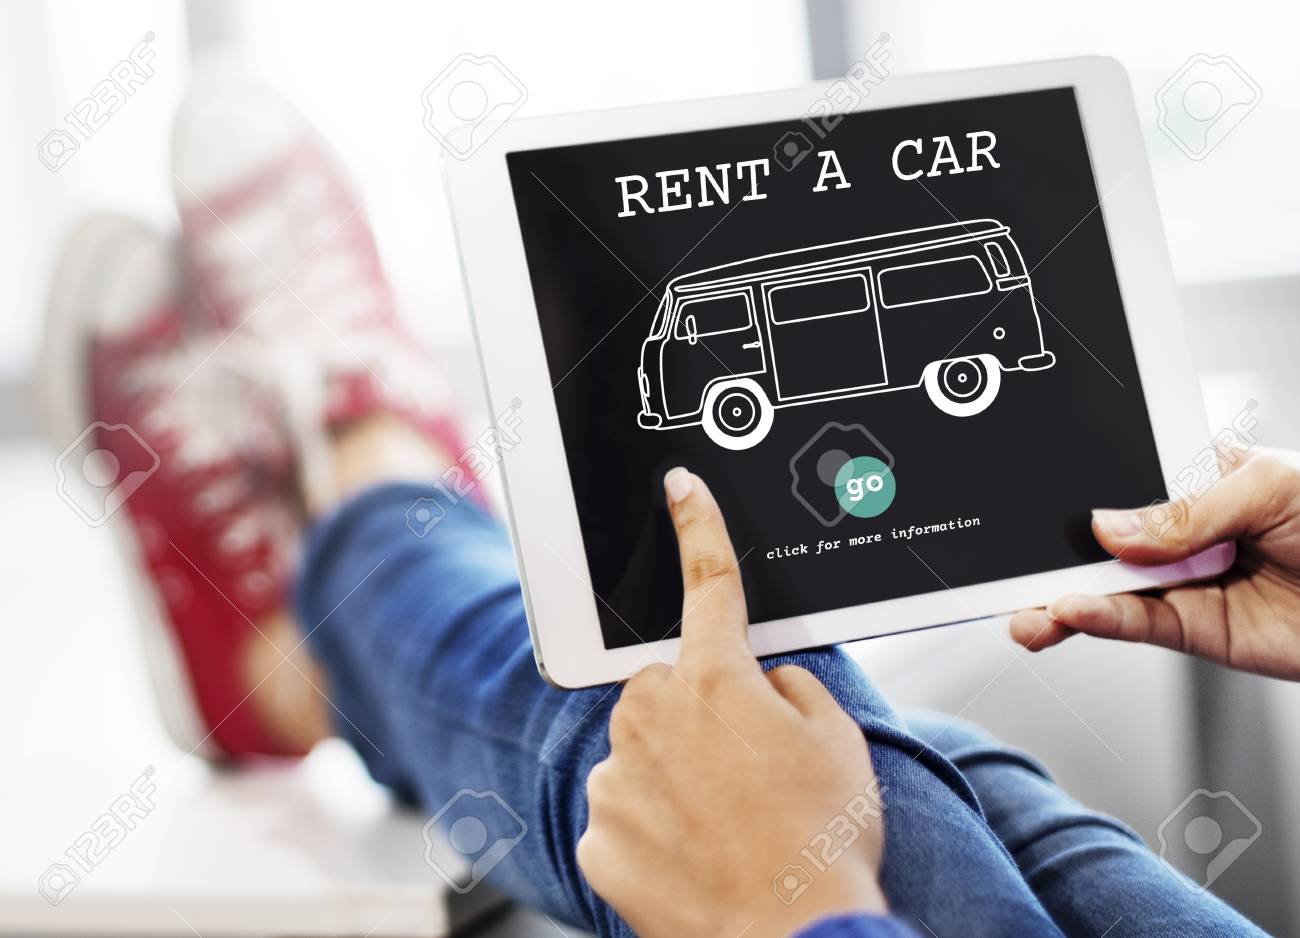 Car Rental Companies - Ibhulogi